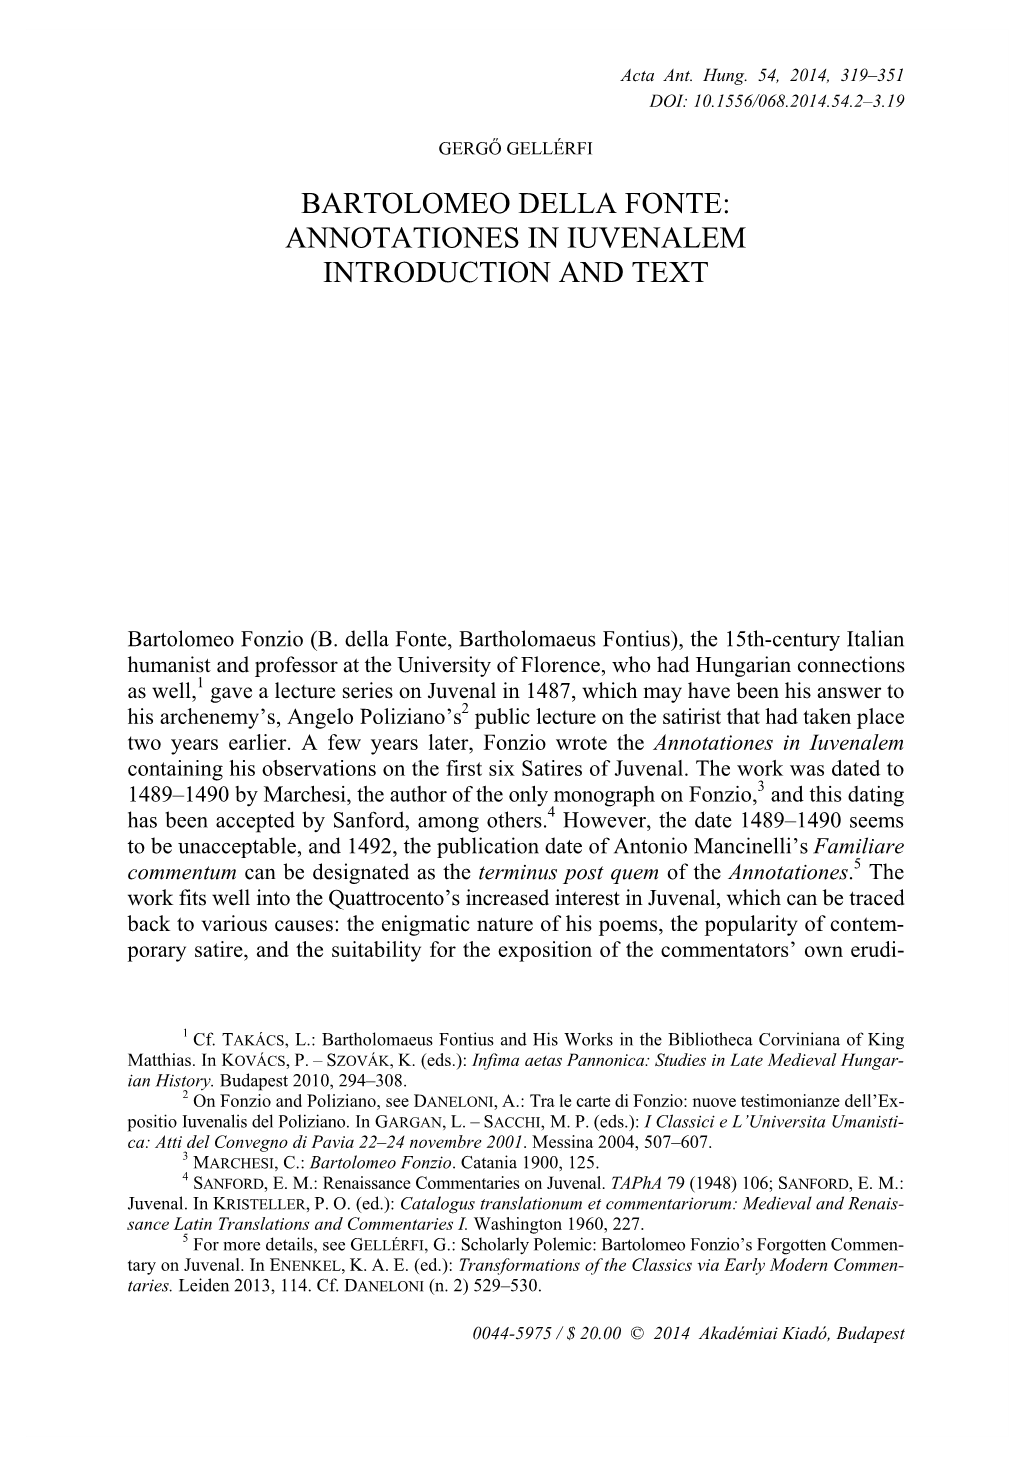 Bartolomeo Della Fonte: Annotationes in Iuvenalem Introduction and Text